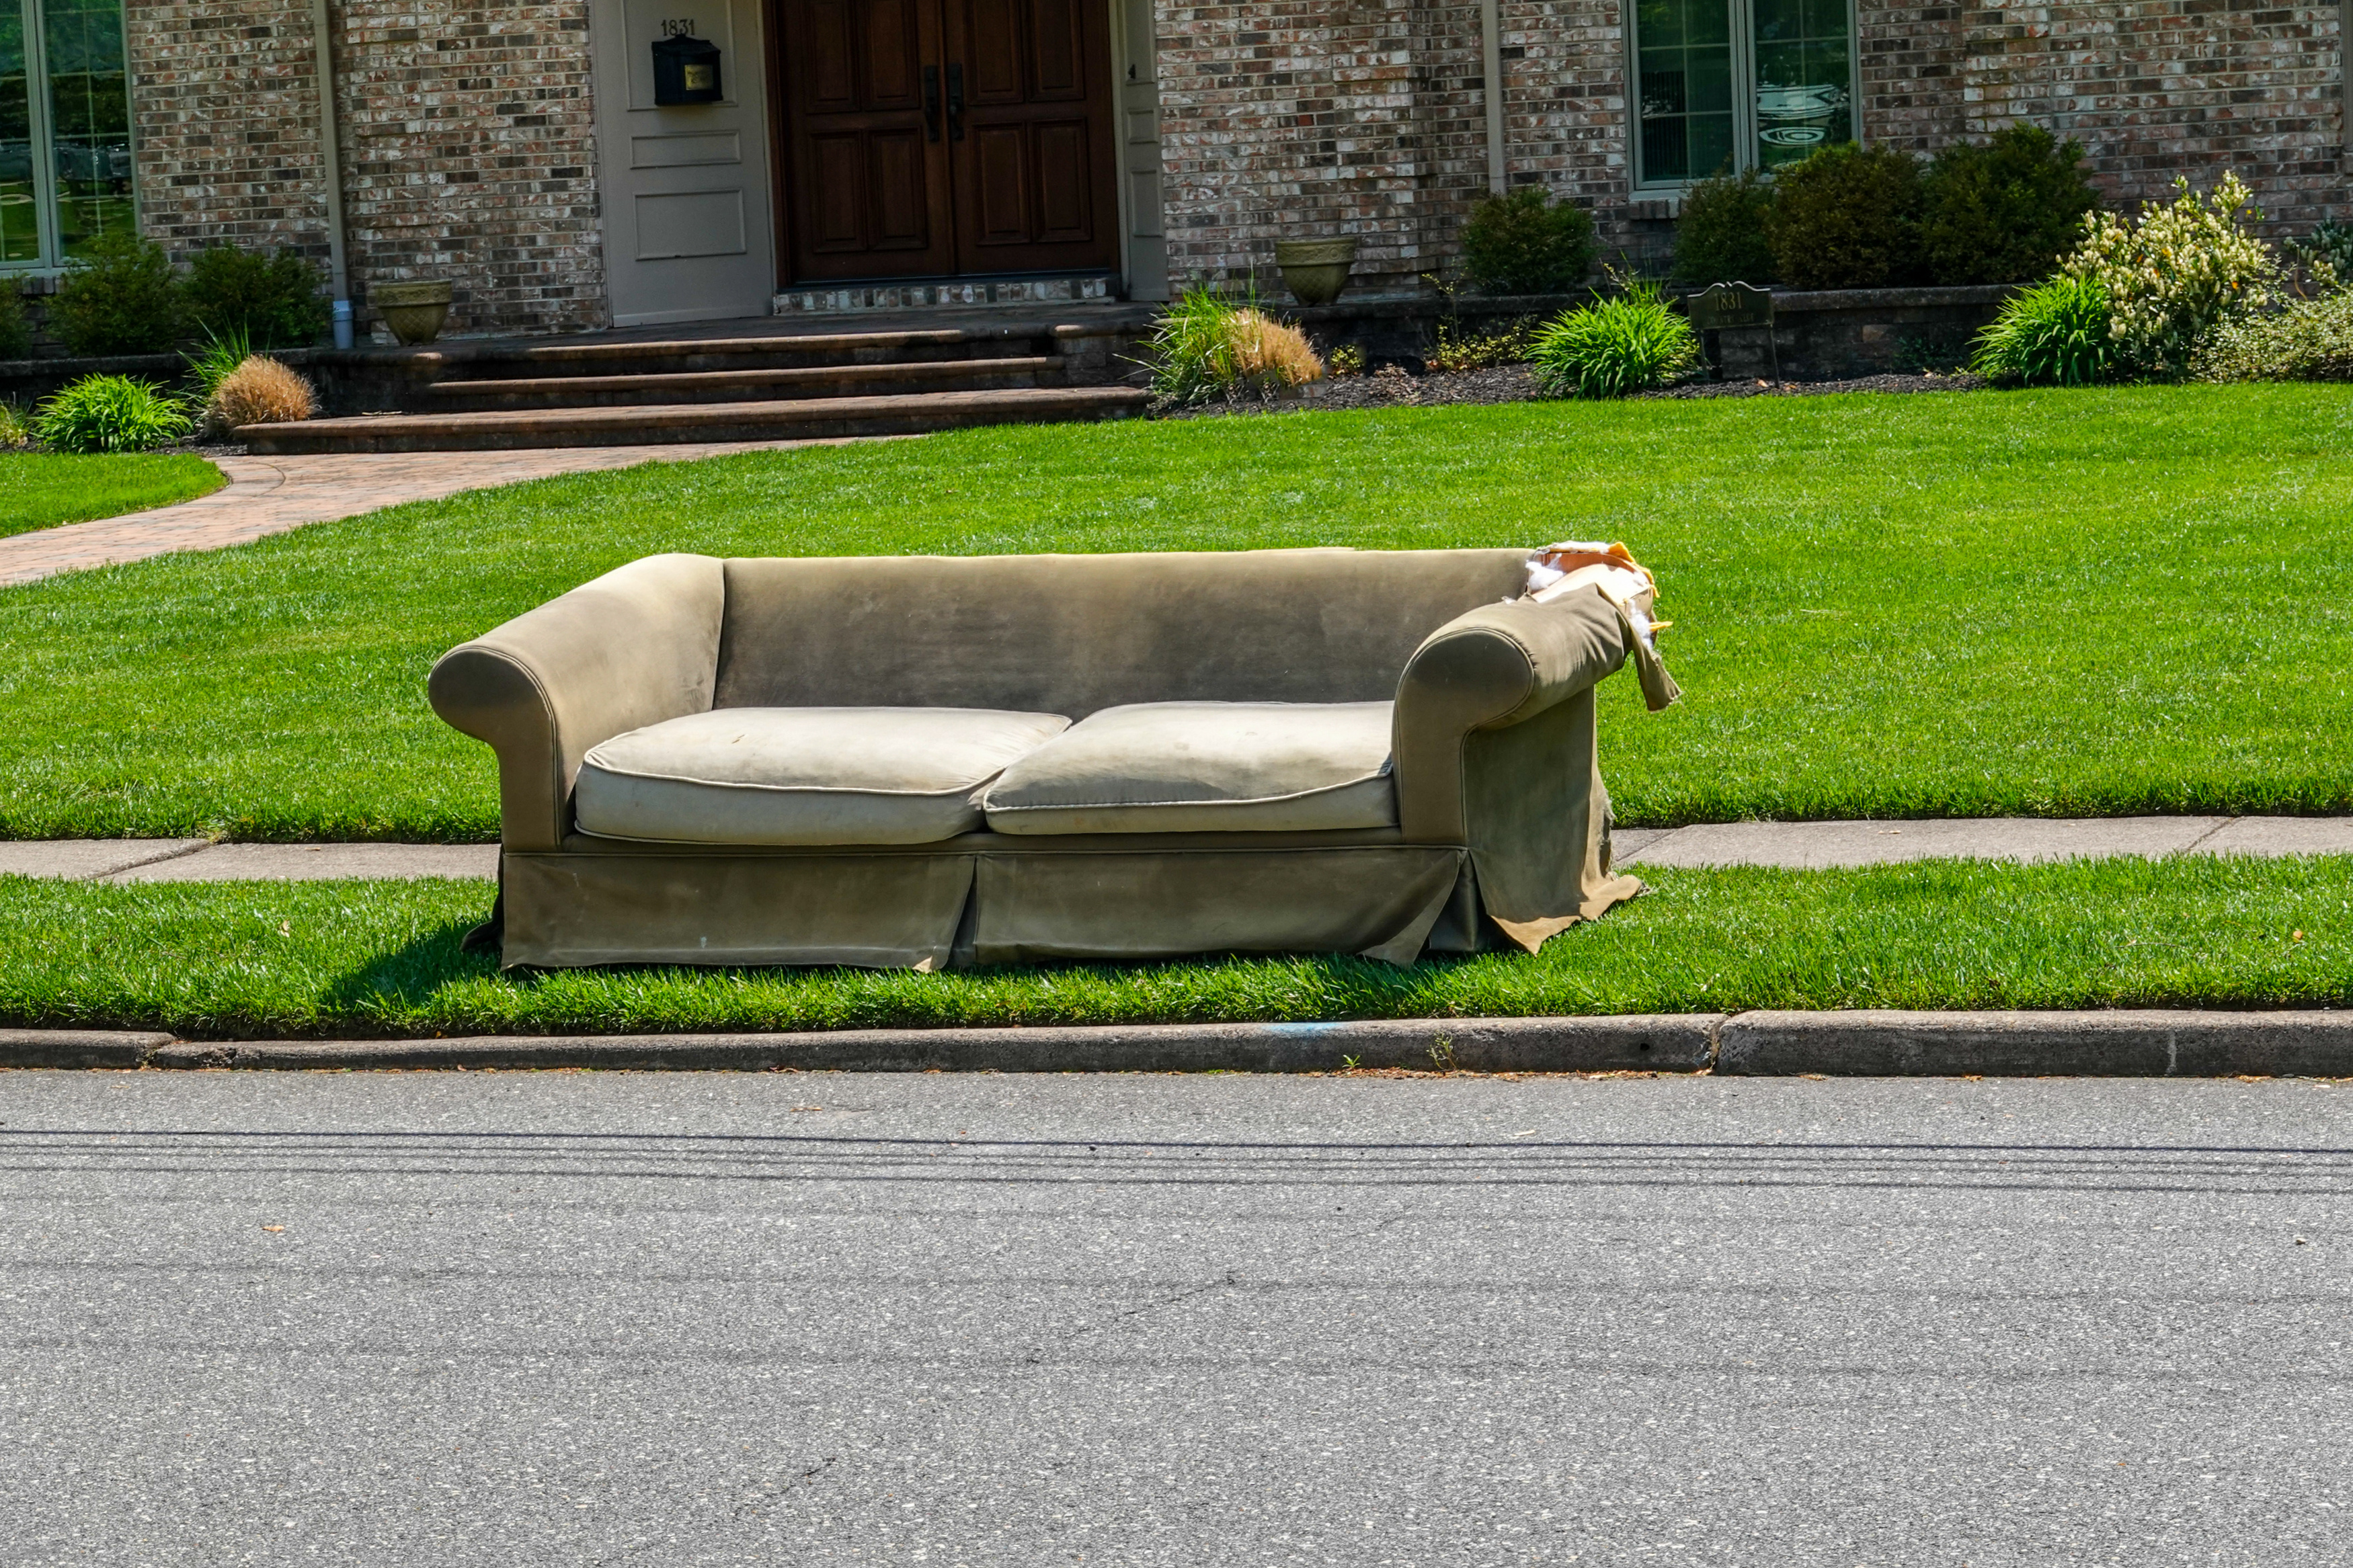 Sofa au bord de la rue